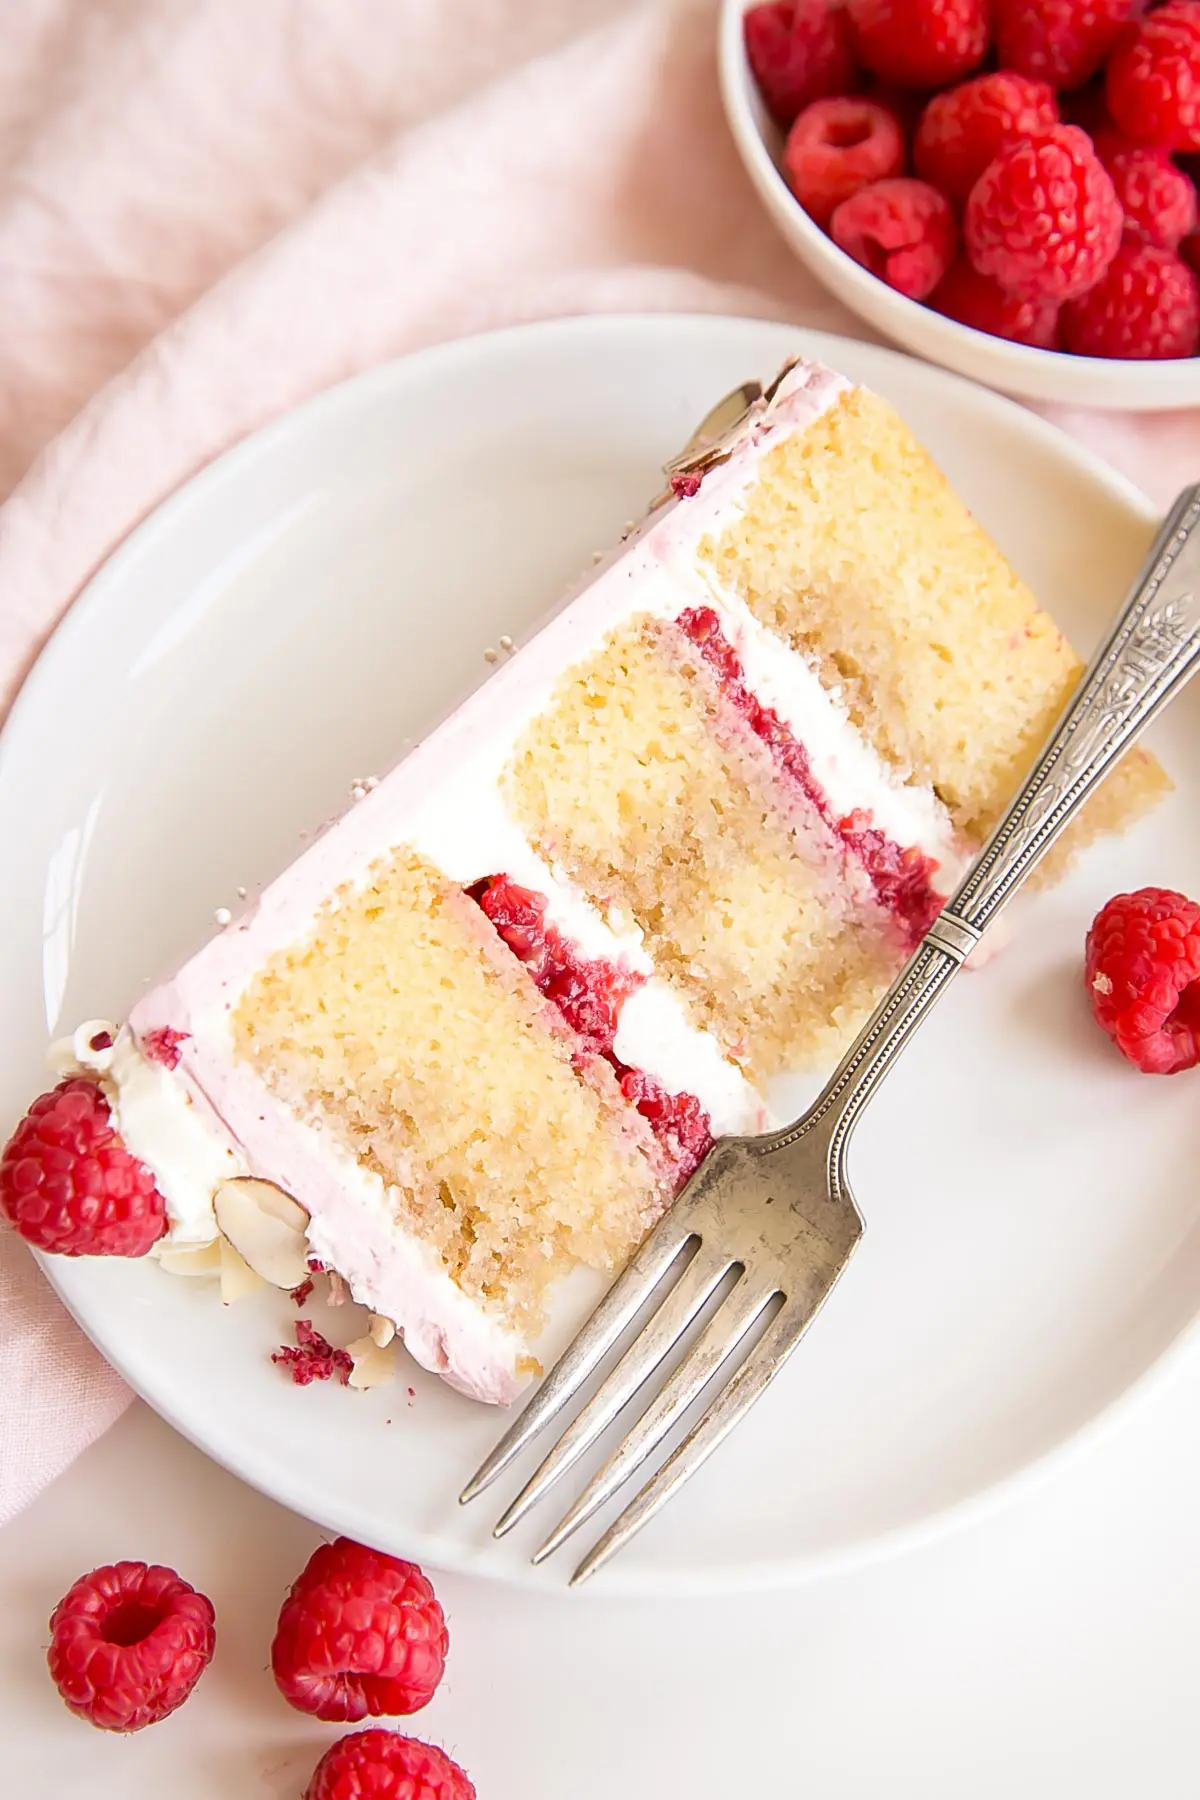 Slice of raspberry almond cake on a plate.